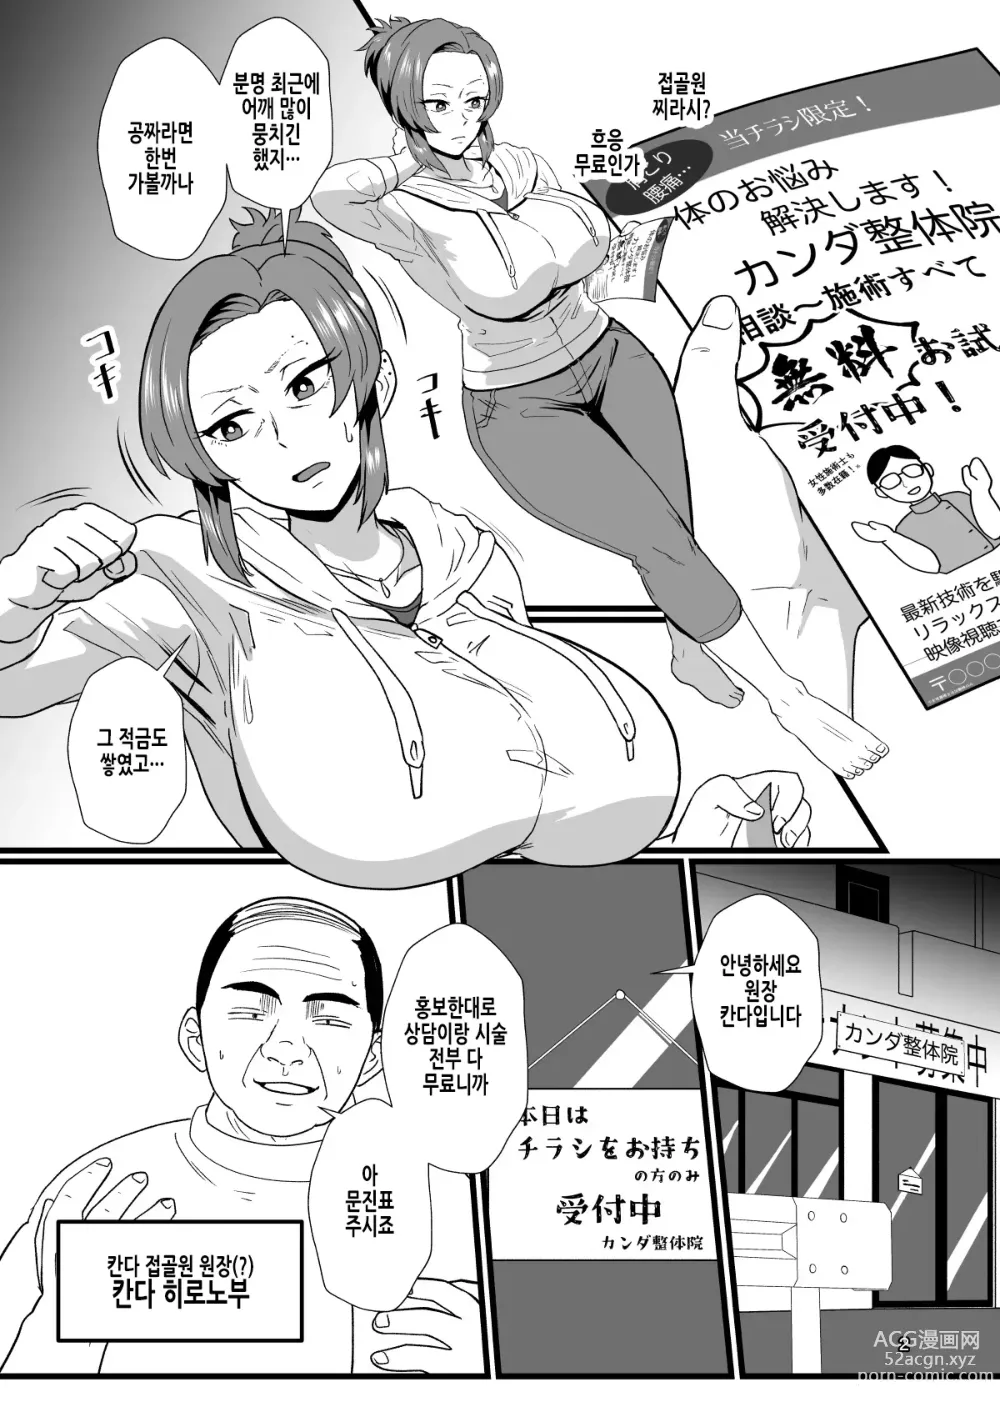 Page 4 of doujinshi 「이런게 바람일리가 없잖아」 ※양키엄마 아마미 히메코는 최면중!